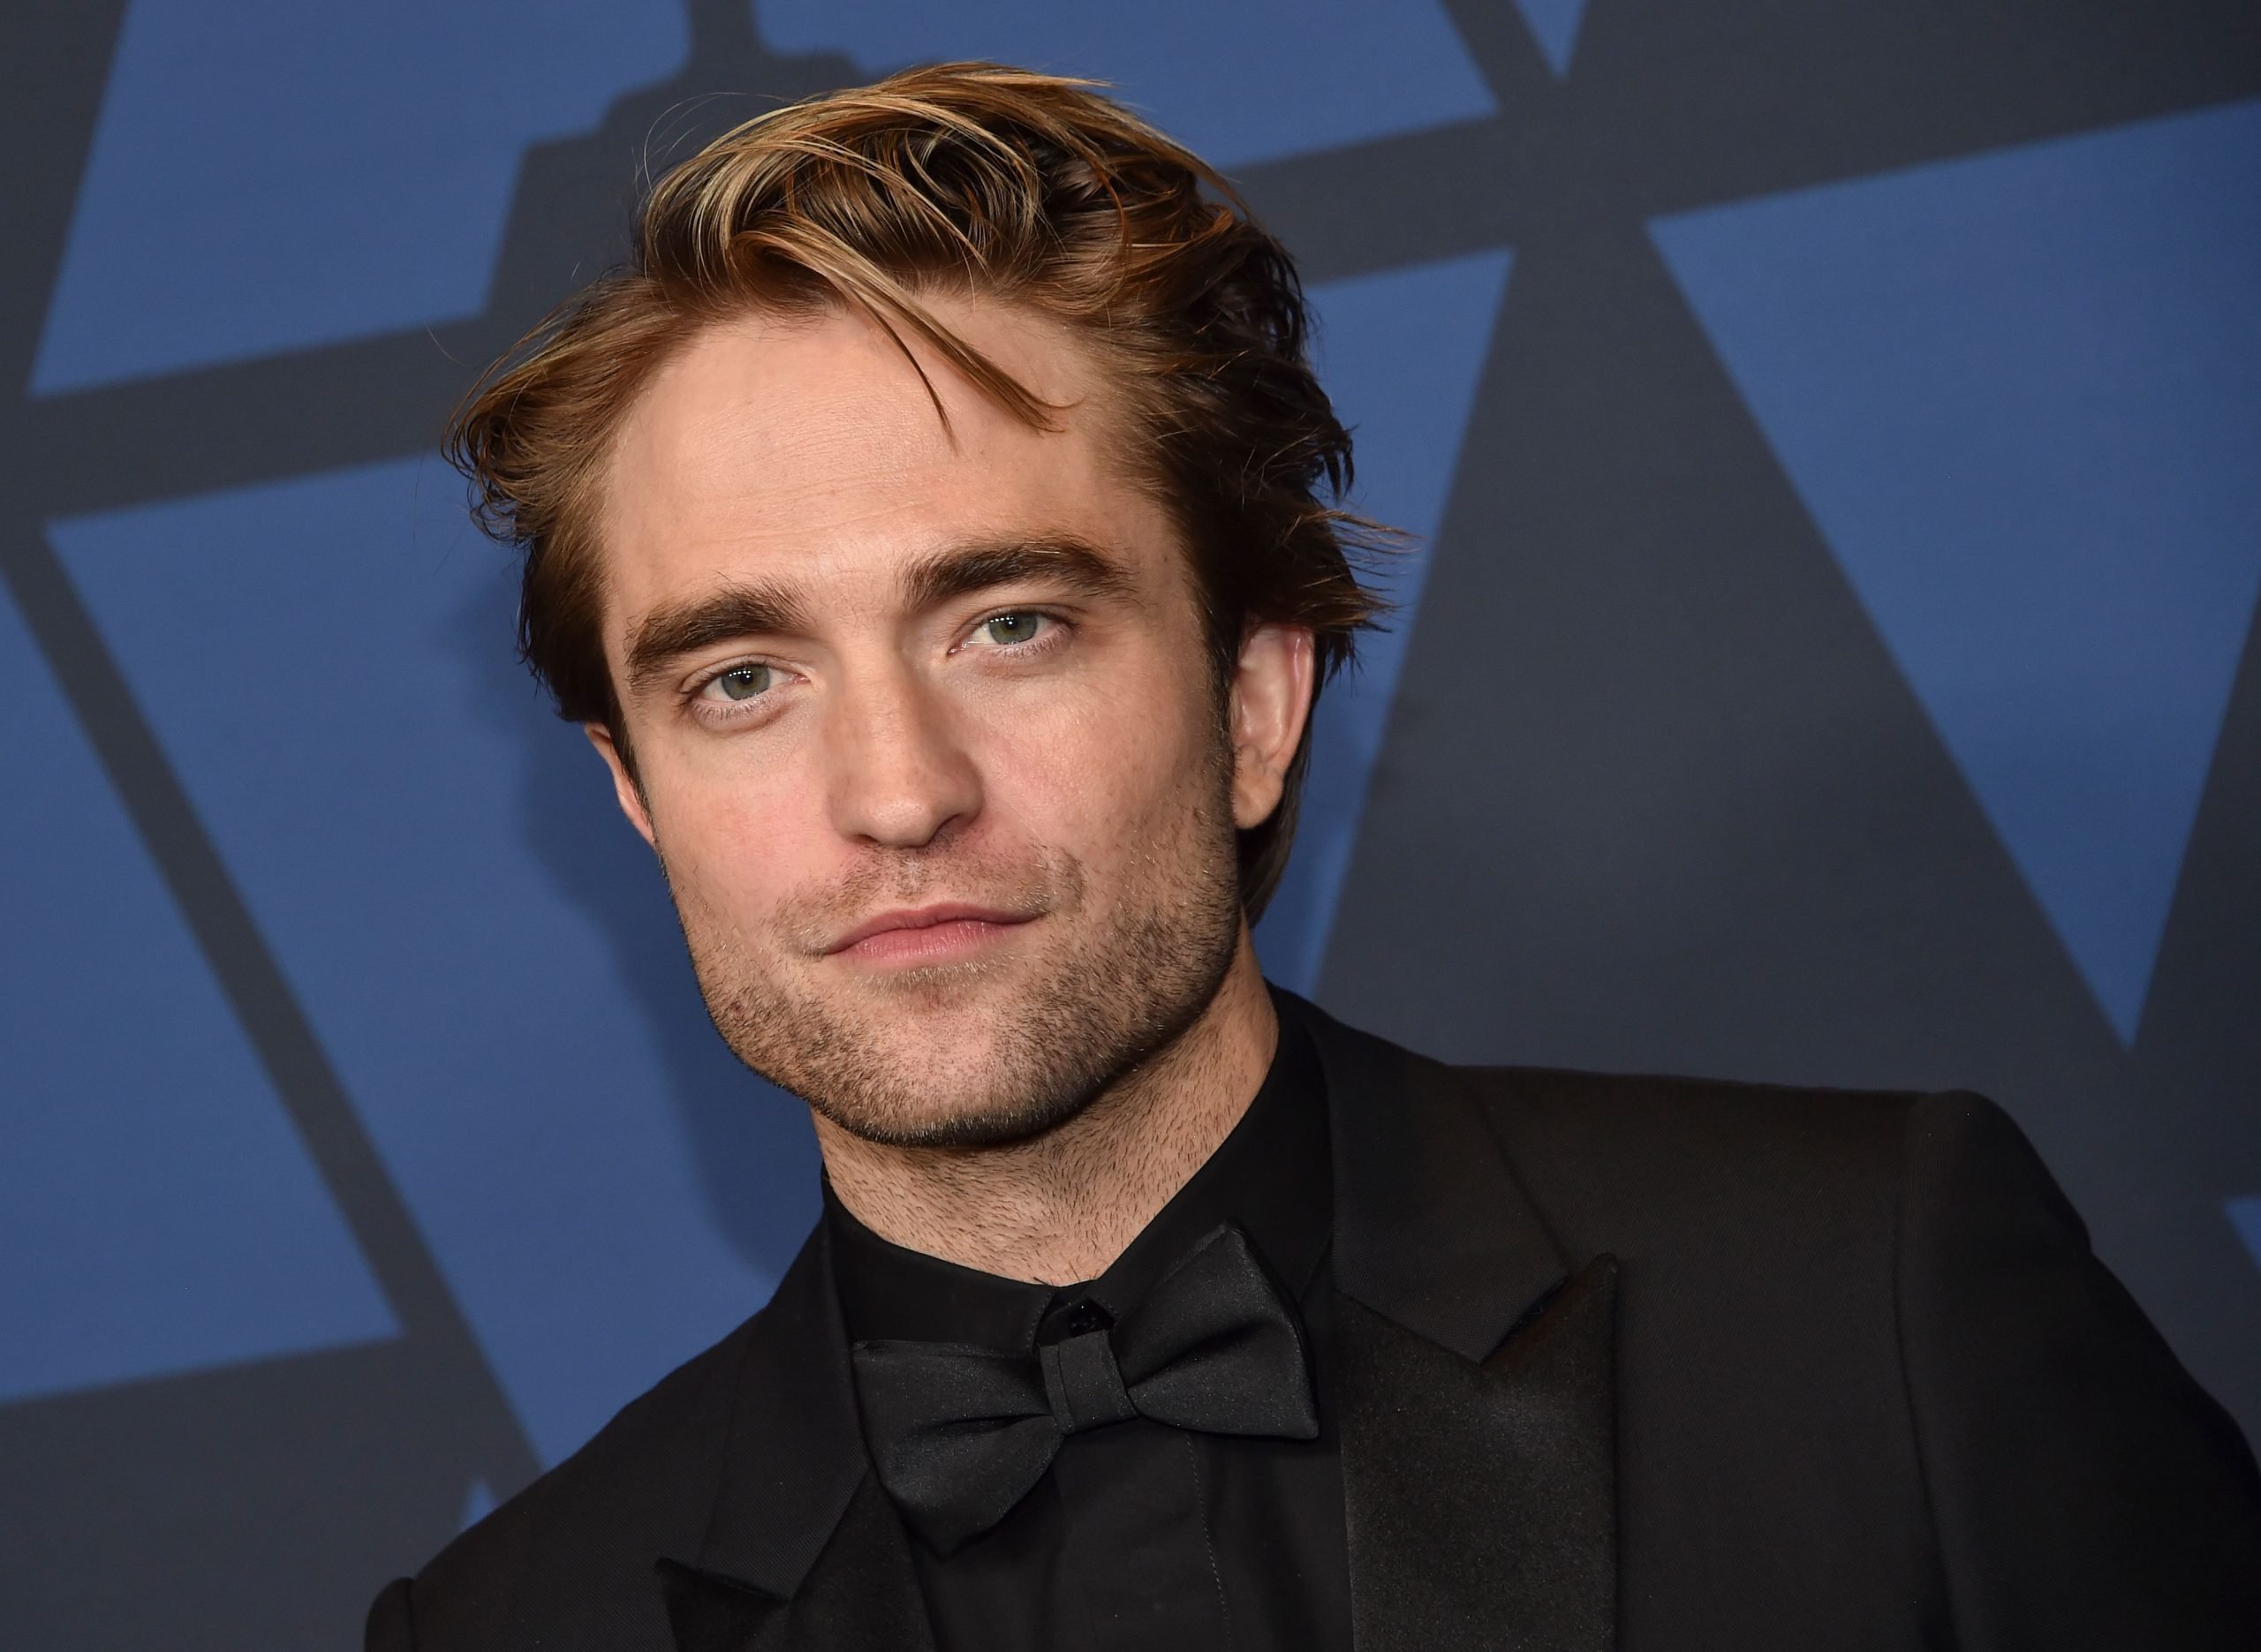 ‘Twilight’ Author Stephenie Meyer Wanted a DC Superhero to Play Edward Cullen Instead of Robert Pattinson